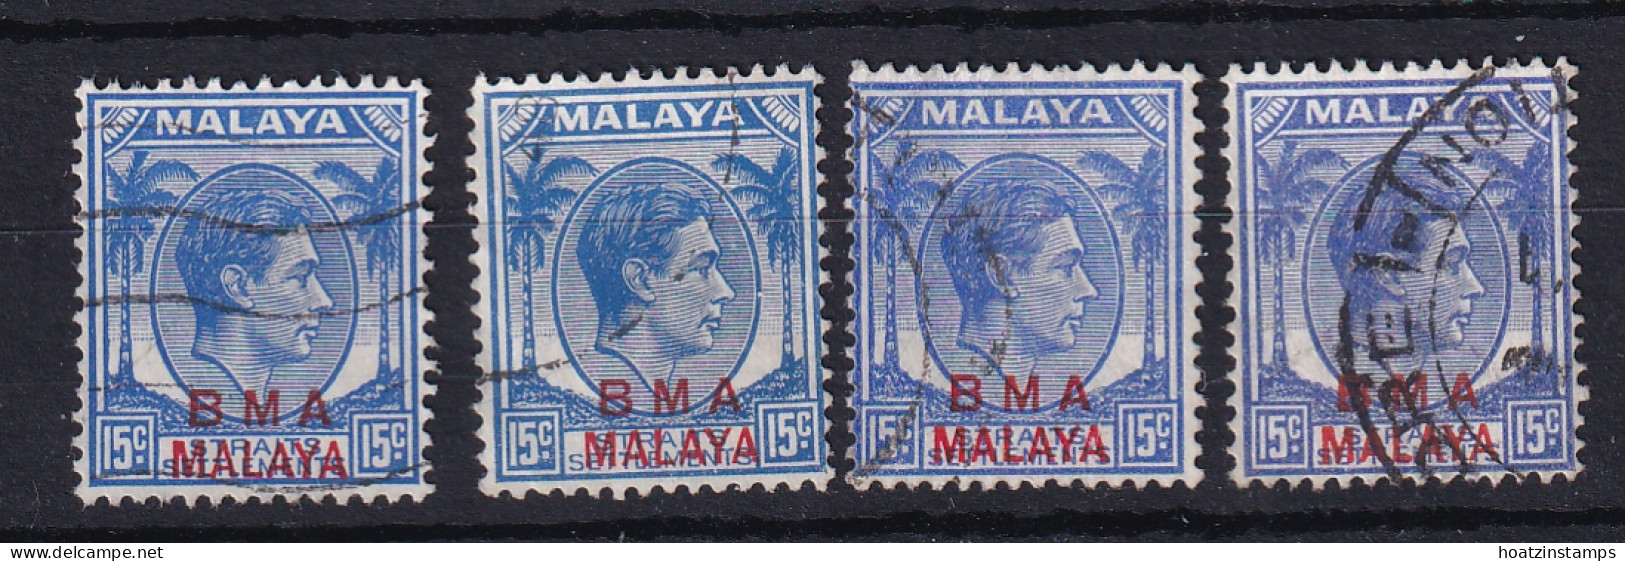 B.M.A. (Malaya): 1945/48   KGVI 'B.M.A.' OVPT   SG12 / 12a/12b / 12ba    15c  [red Overprint]   Used - Malaya (British Military Administration)